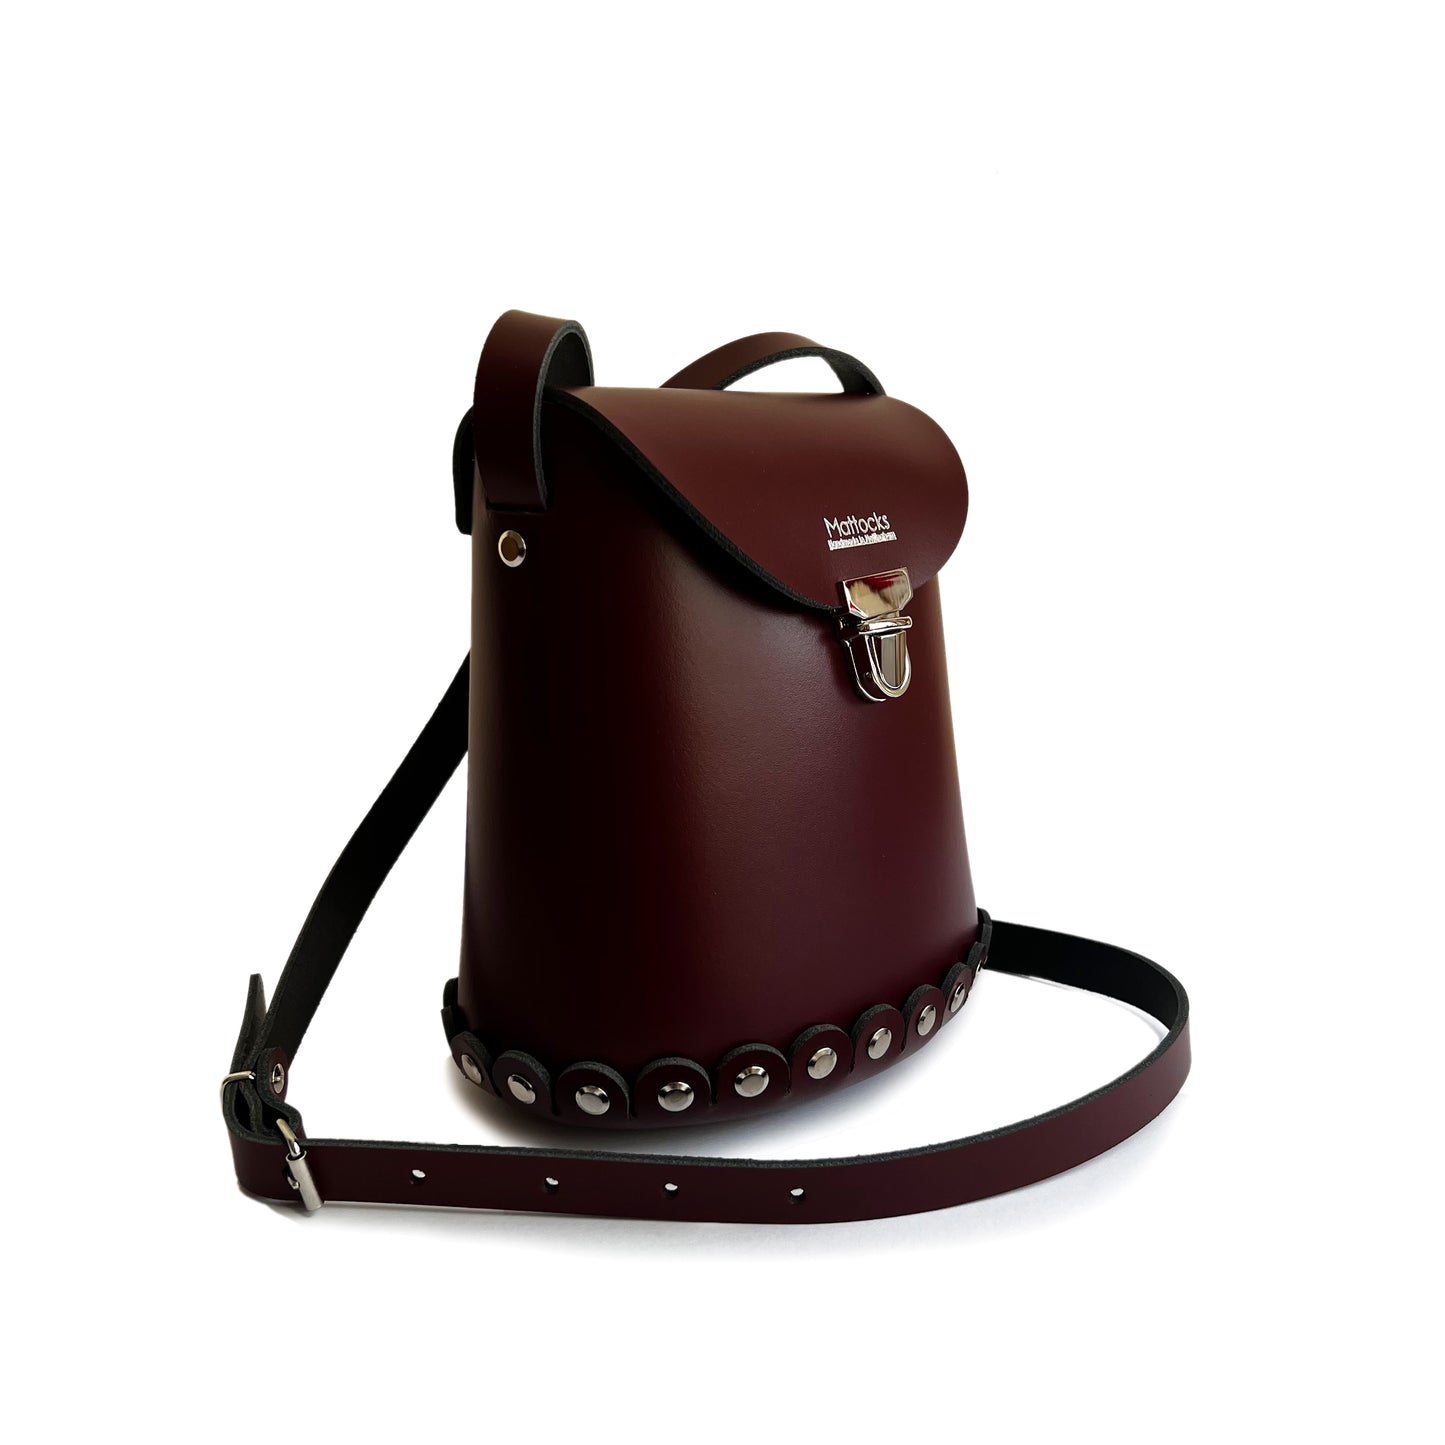 Leather Bucket Bags